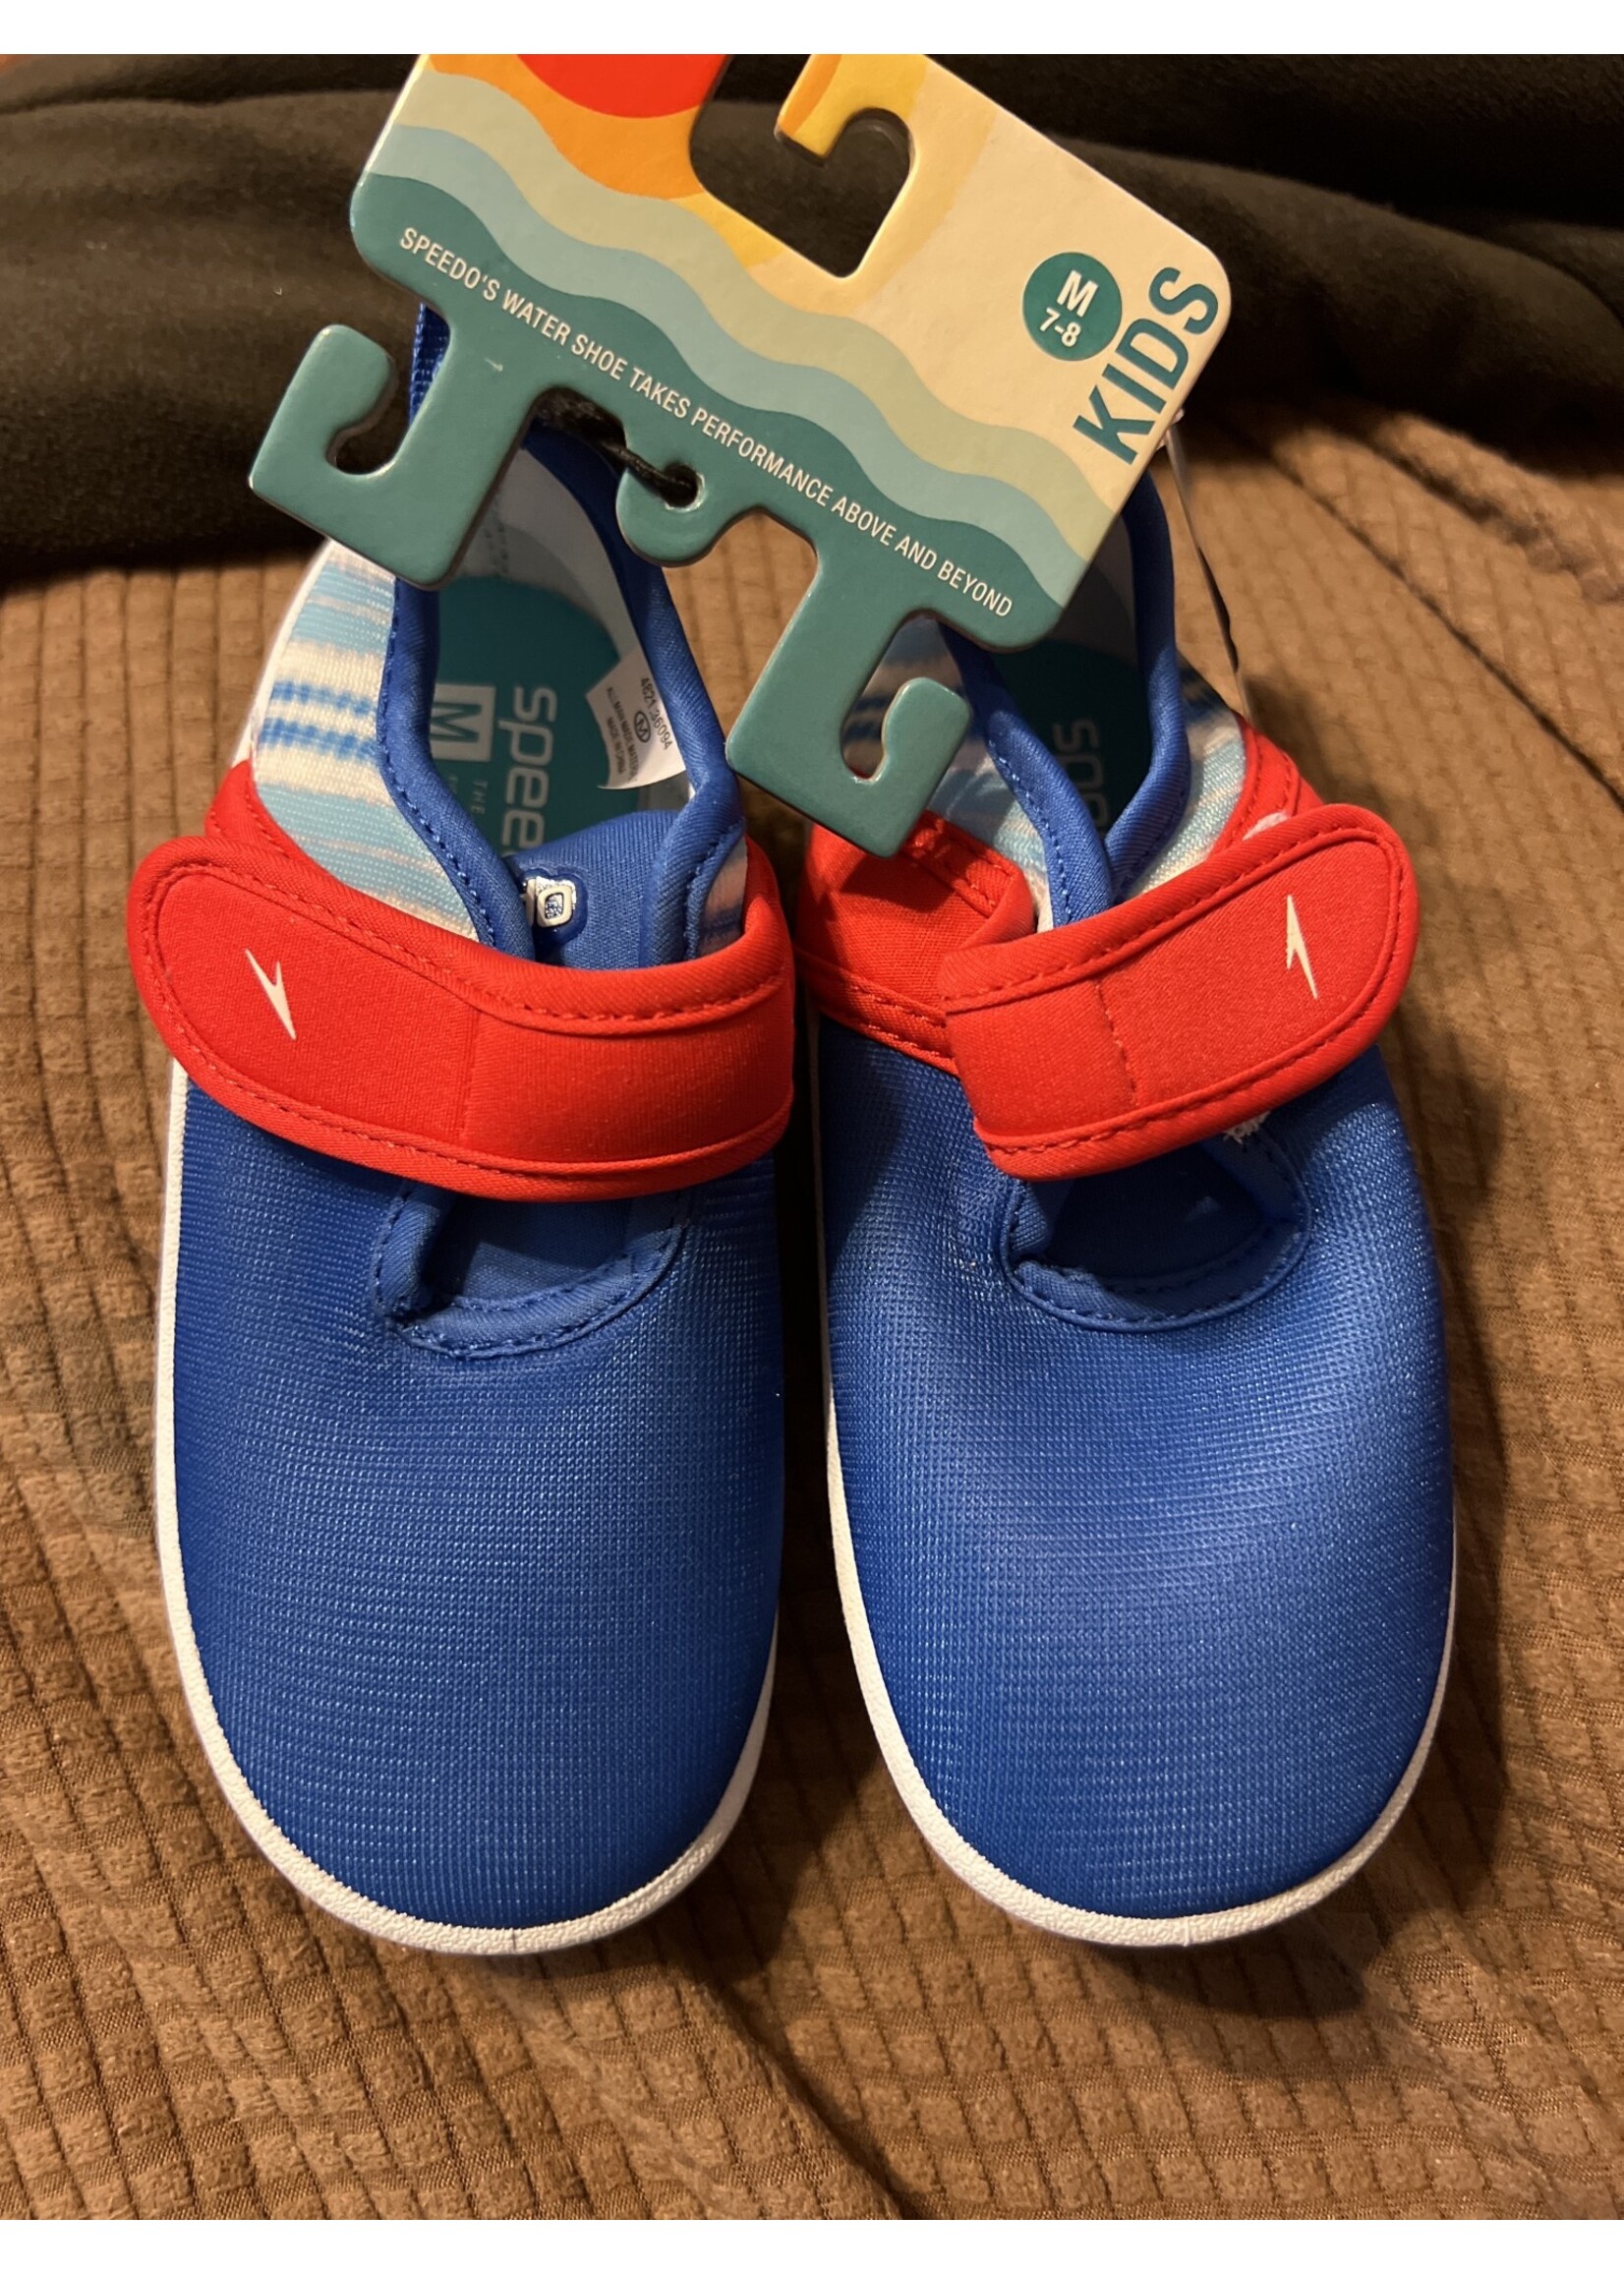 Speedo Toddler Printed Shore Explorer Water Shoes - Blue Tie-Dye M 7-8